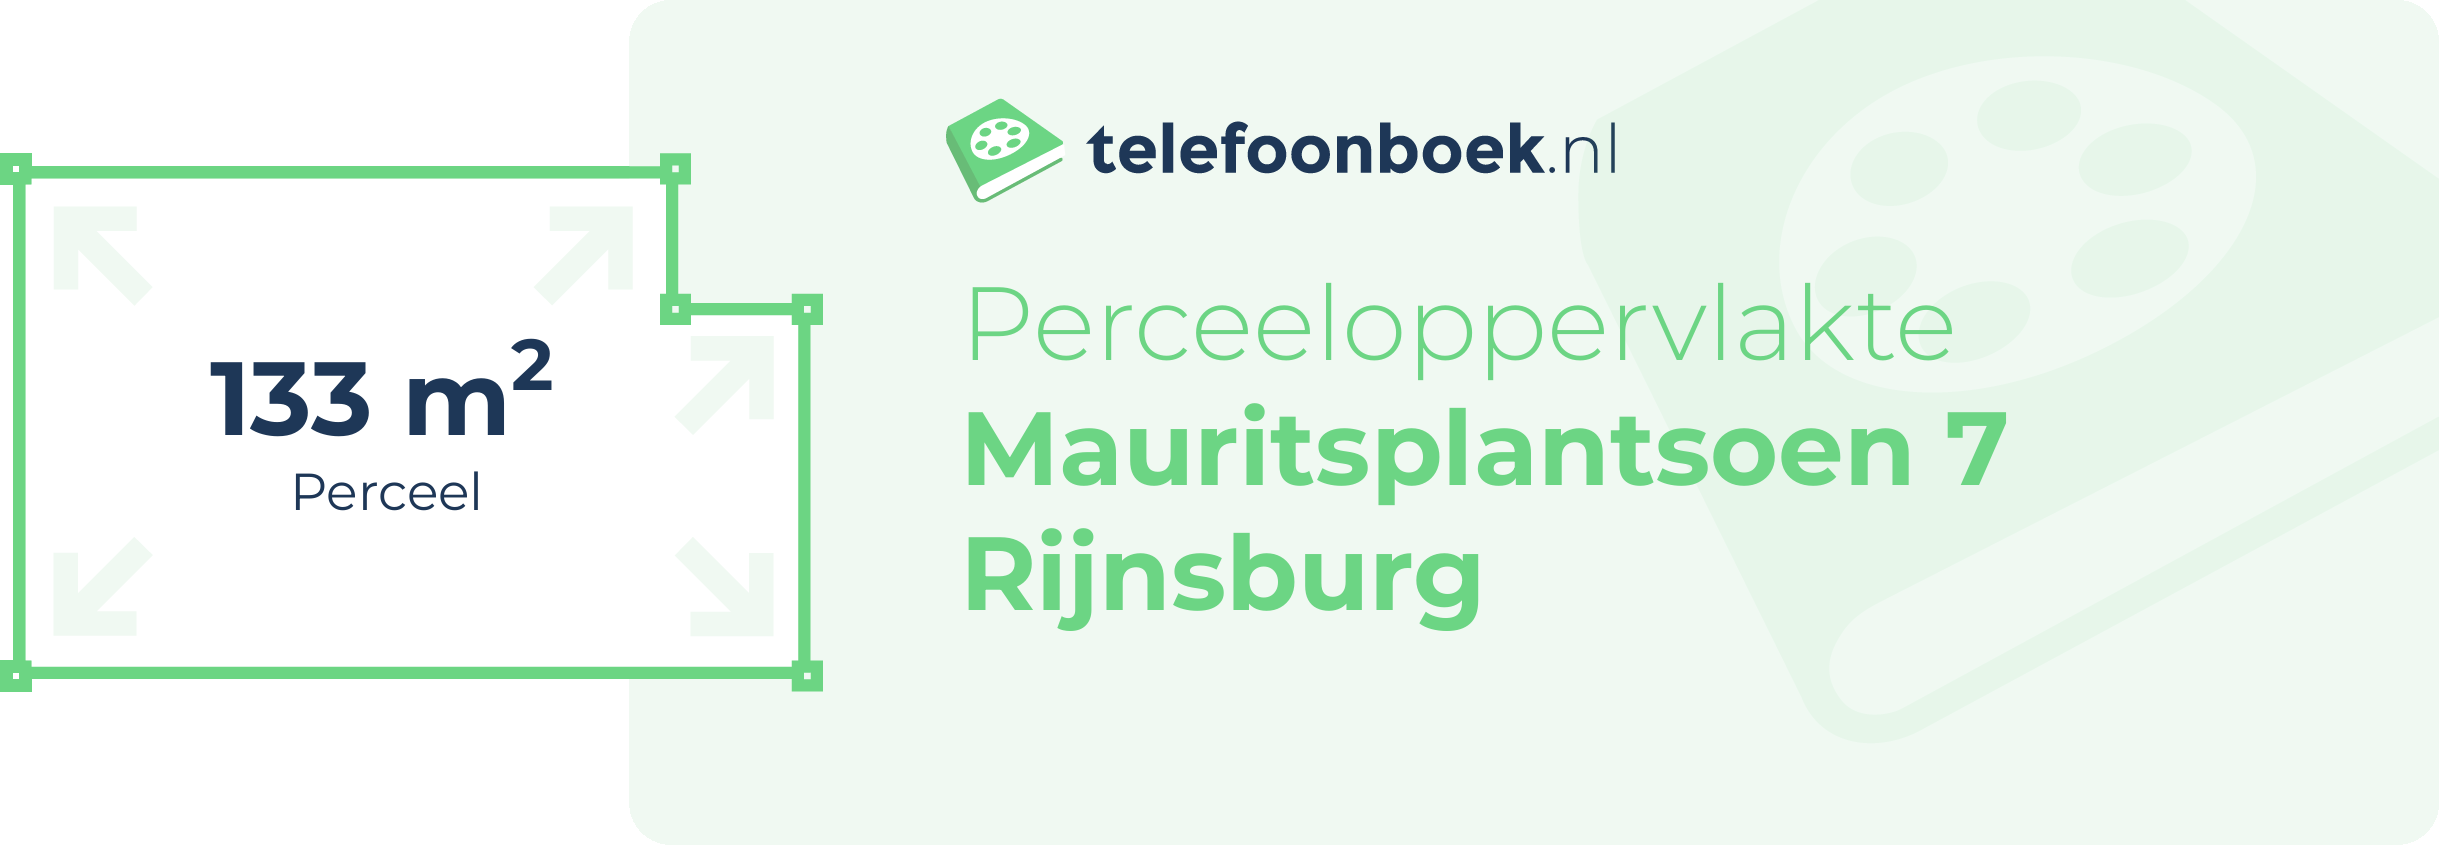 Perceeloppervlakte Mauritsplantsoen 7 Rijnsburg